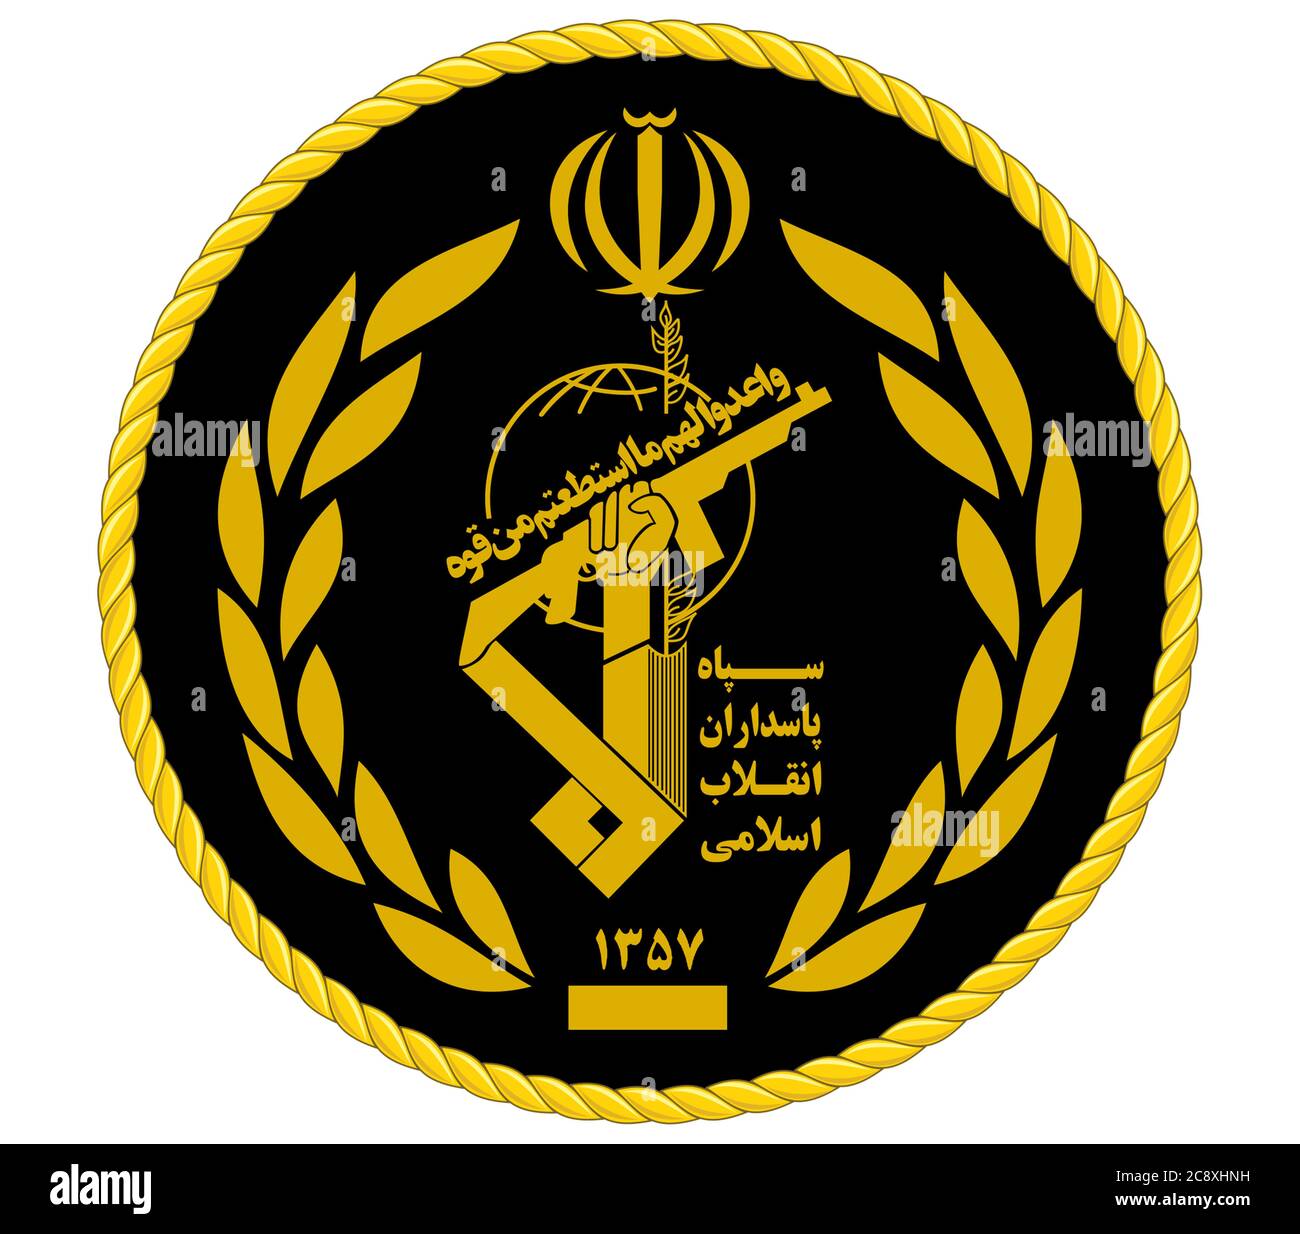 Iranian Quds Force - Revolutionary Guard Stock Photo